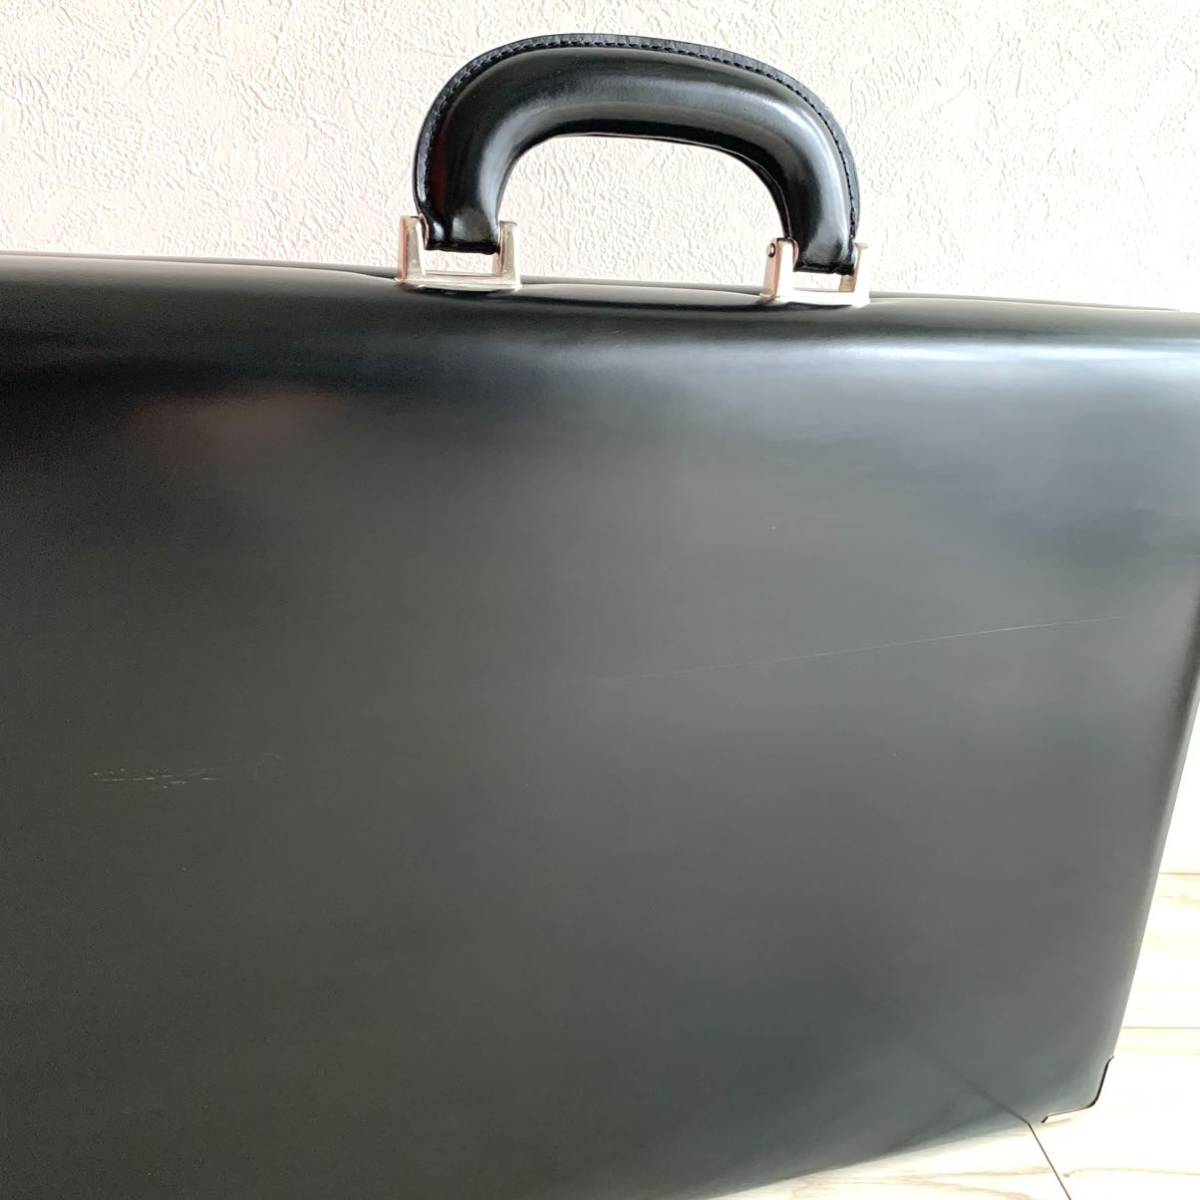 peronipe low ni business bag black attache case dial lock leather bag 